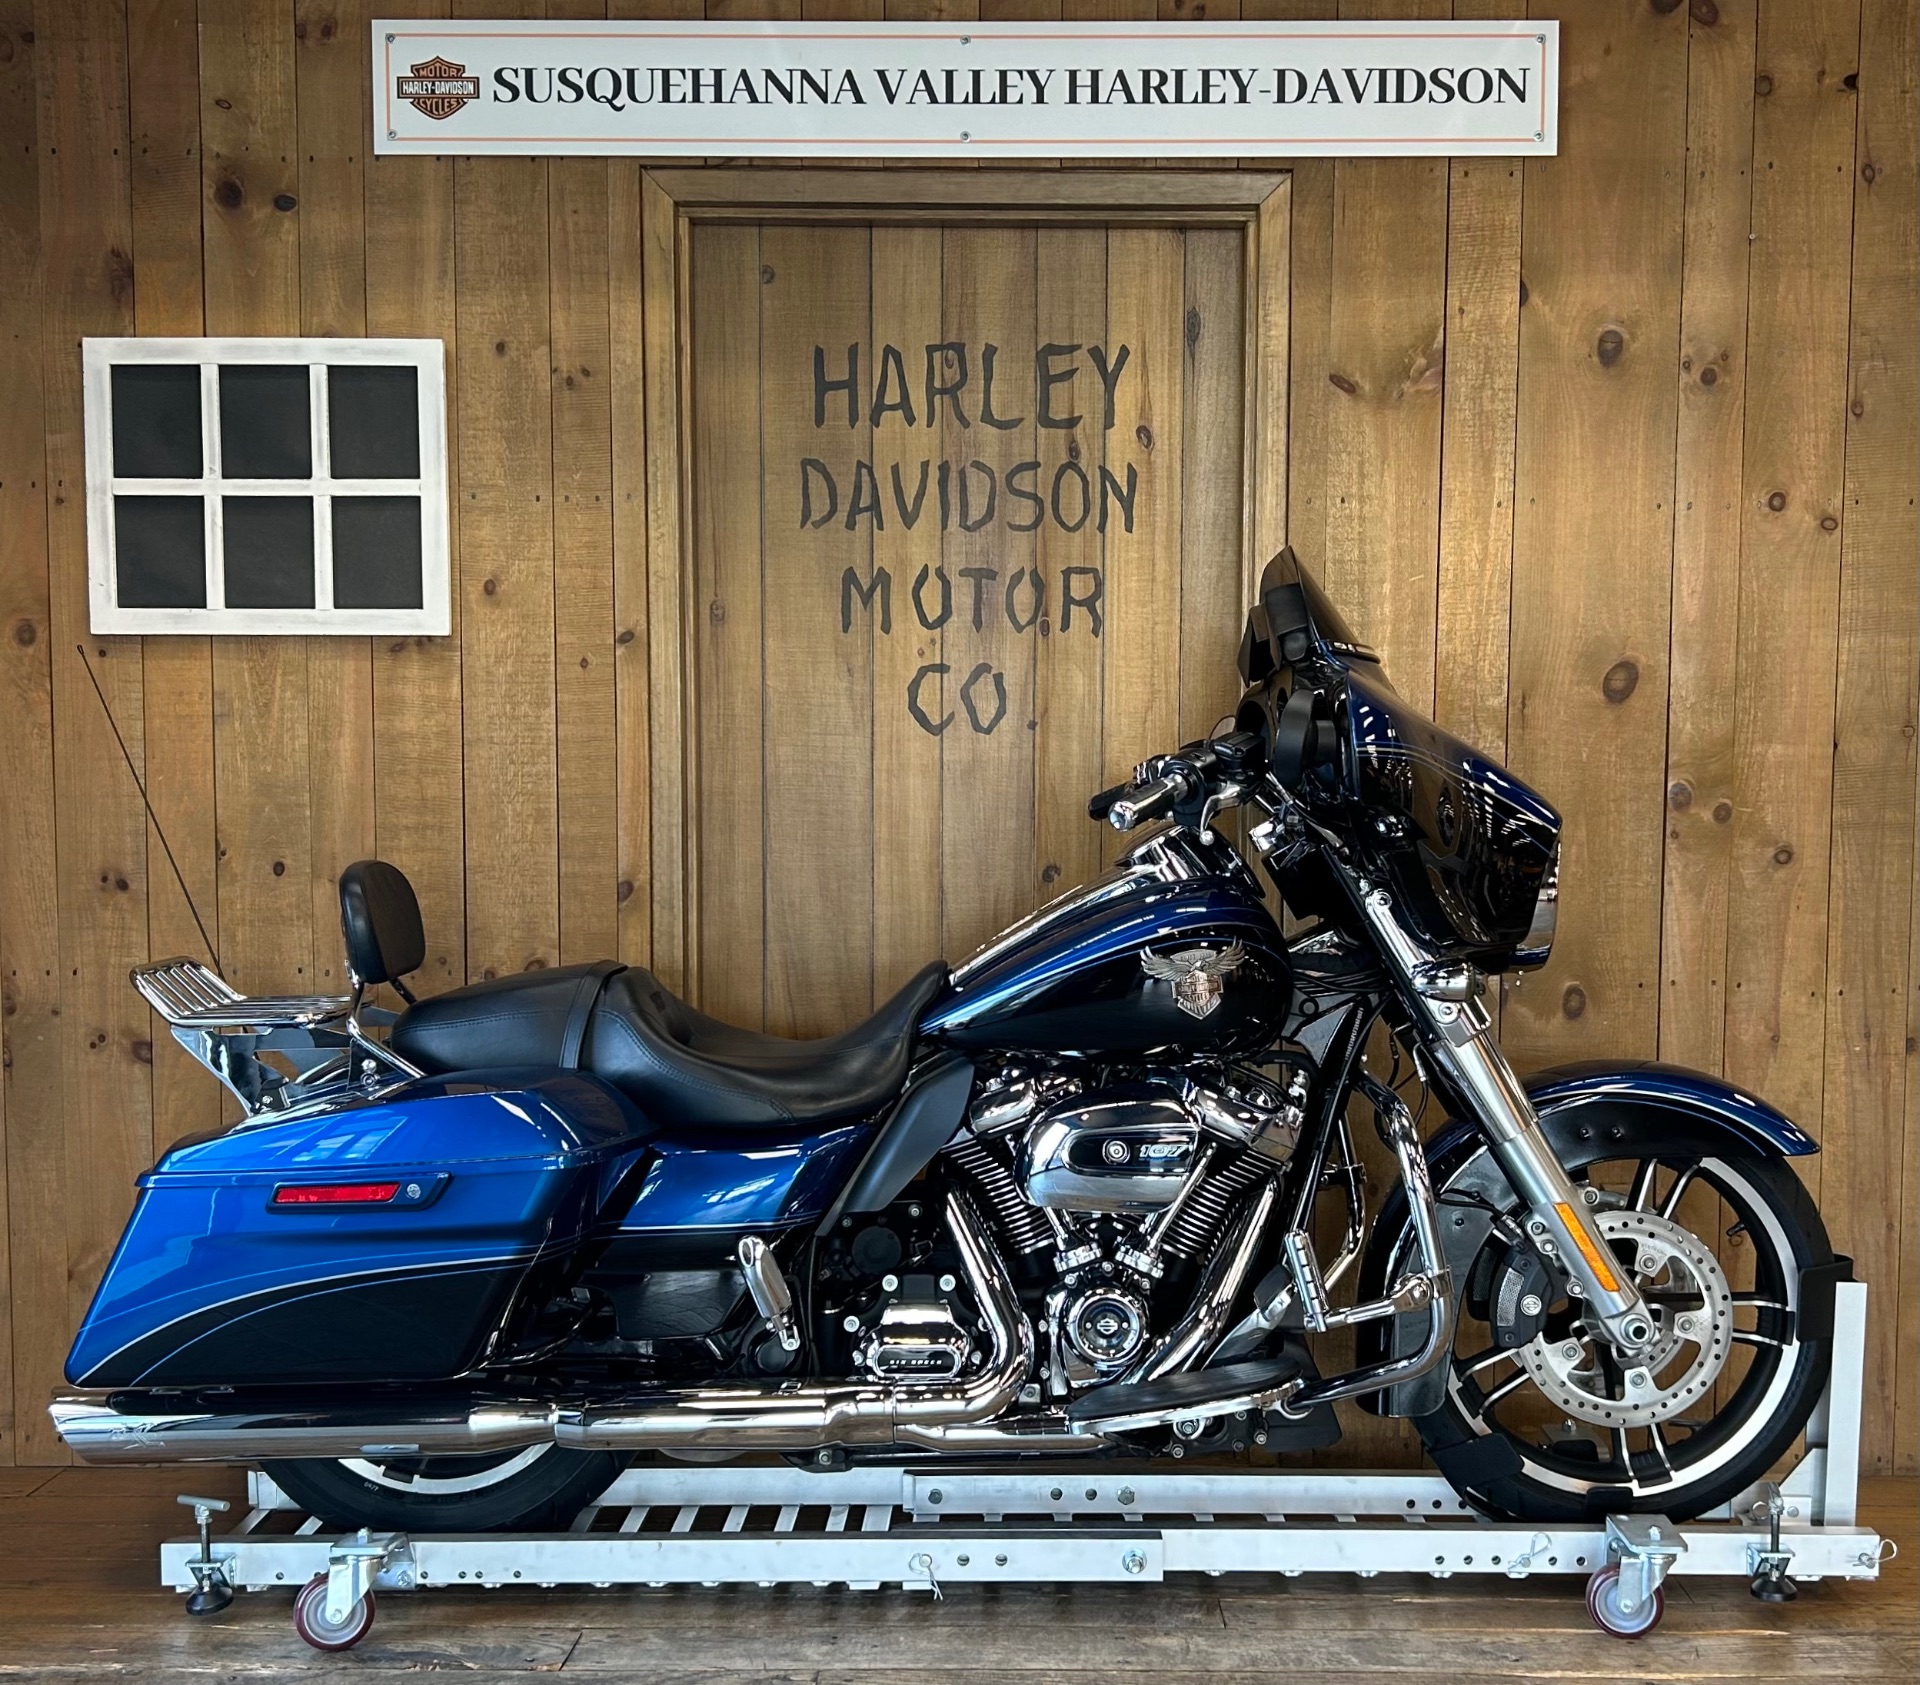 2018 Harley-Davidson Street Glide Anniversary in Harrisburg, Pennsylvania - Photo 1